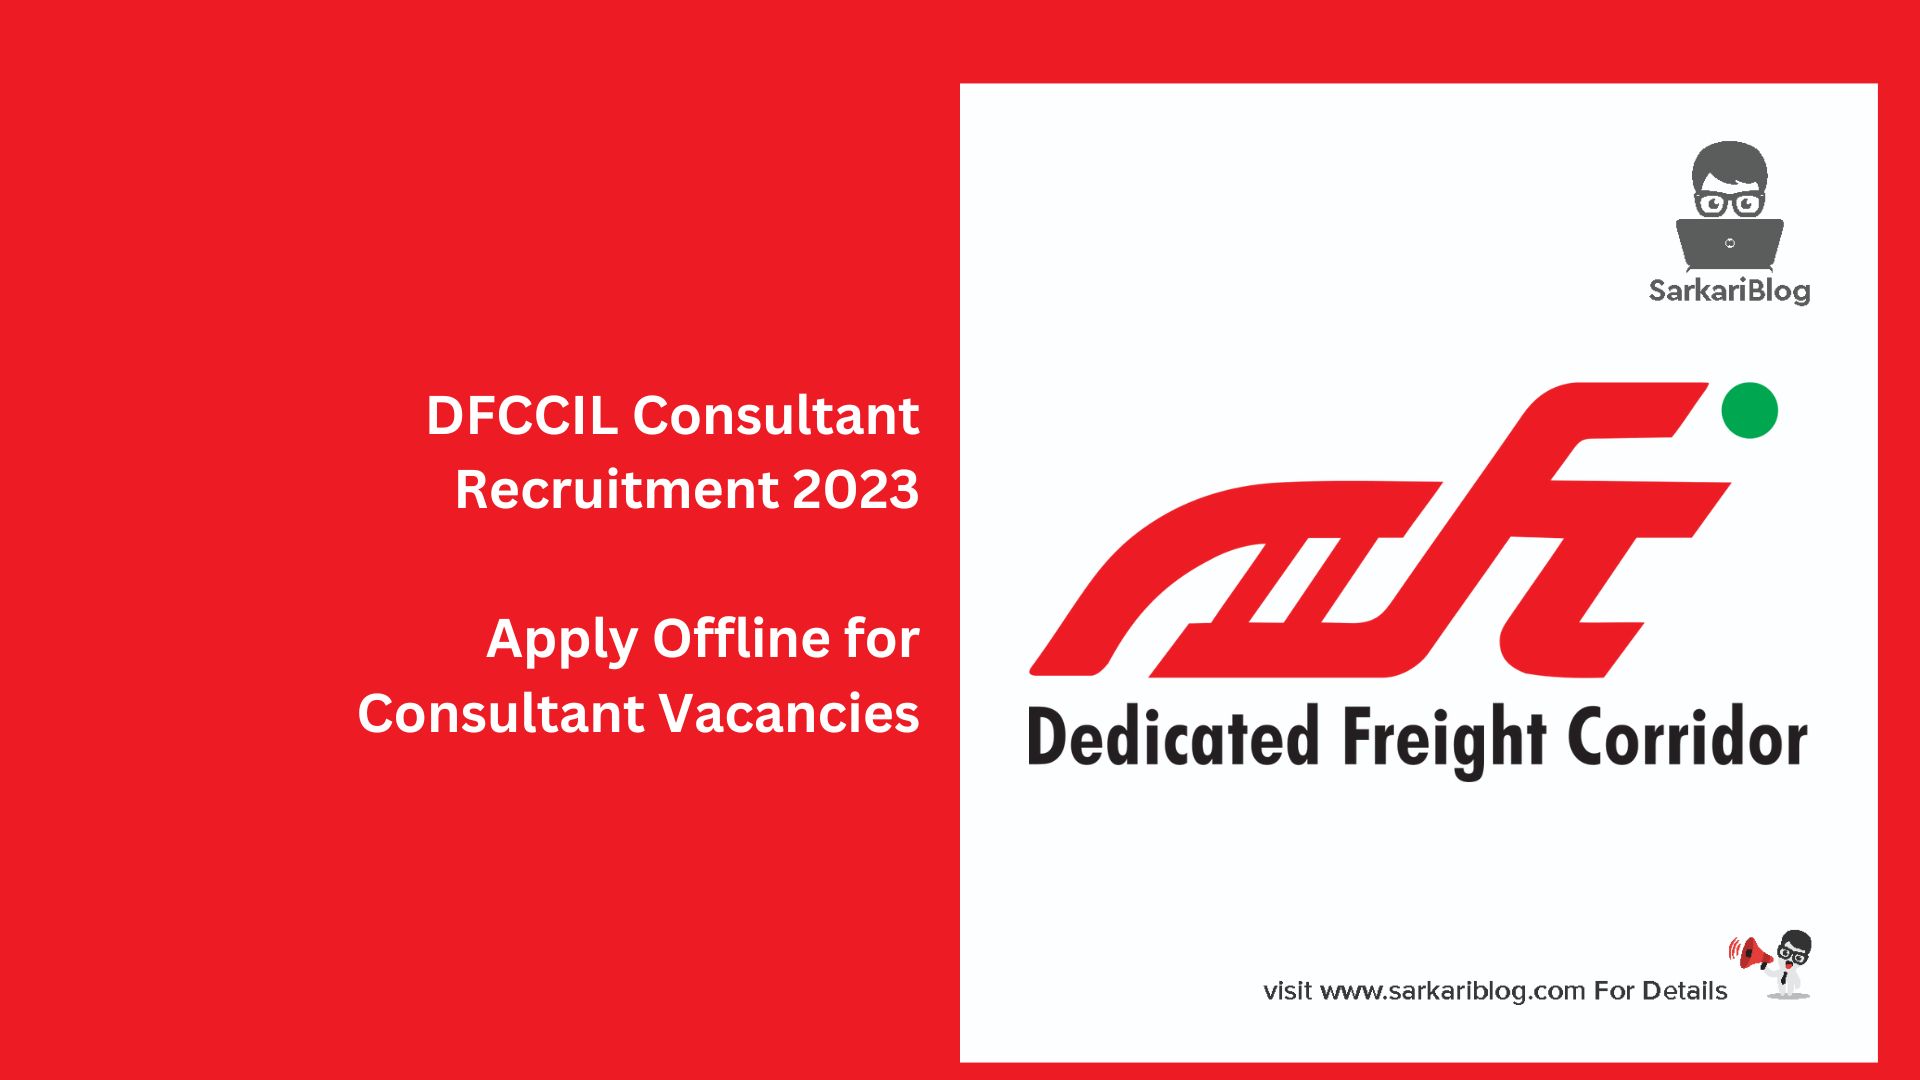 DFCCIL Consultant Recruitment 2023